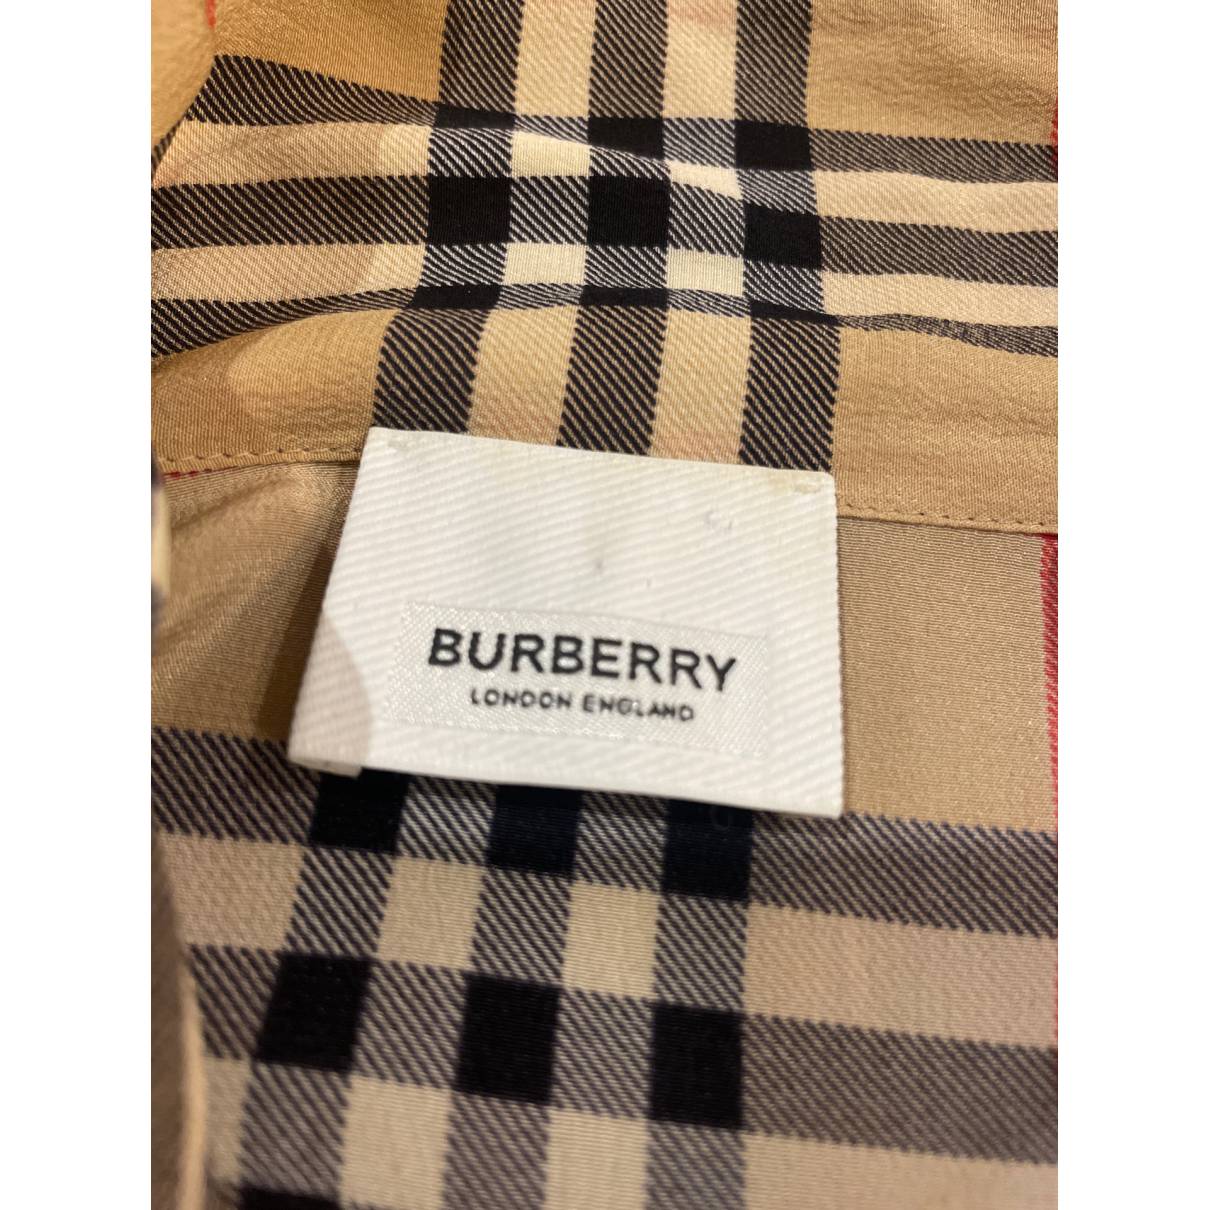 Buy Burberry Silk shirt online